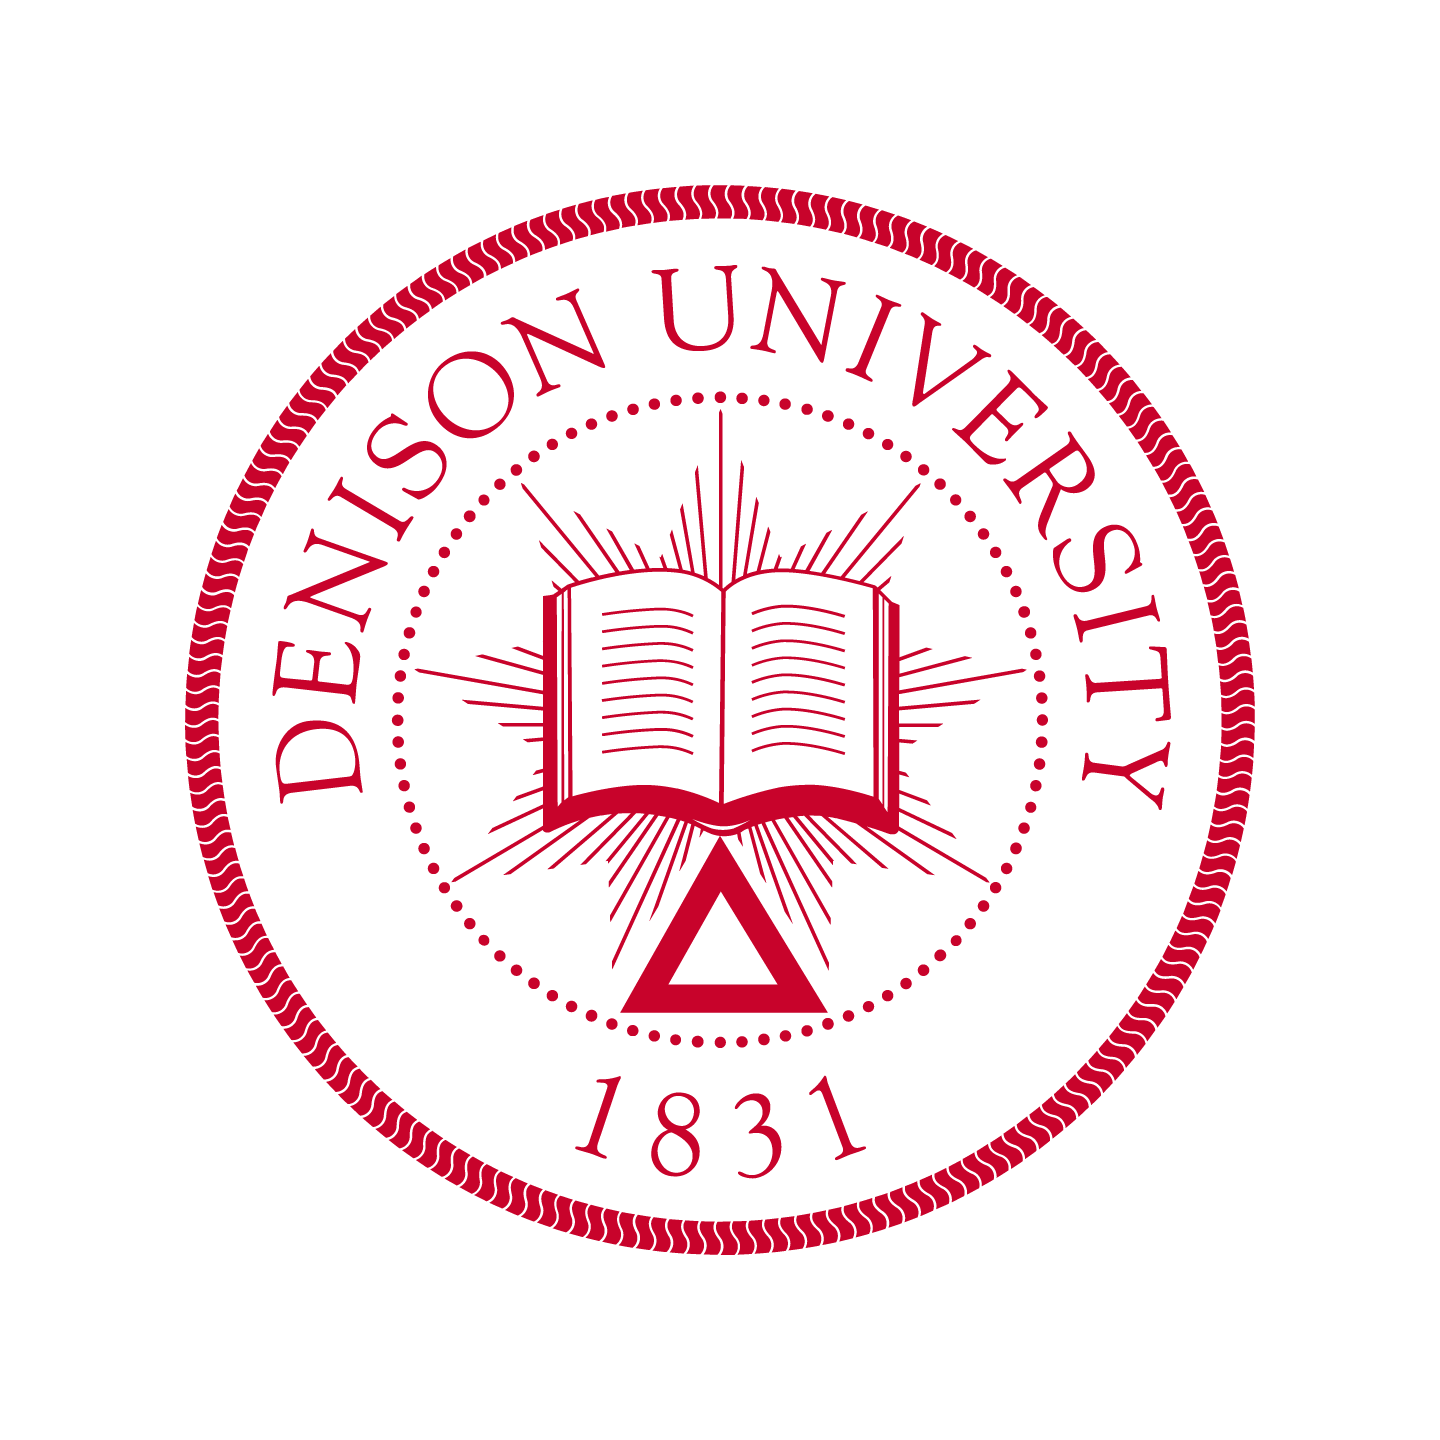 Denison University Seal